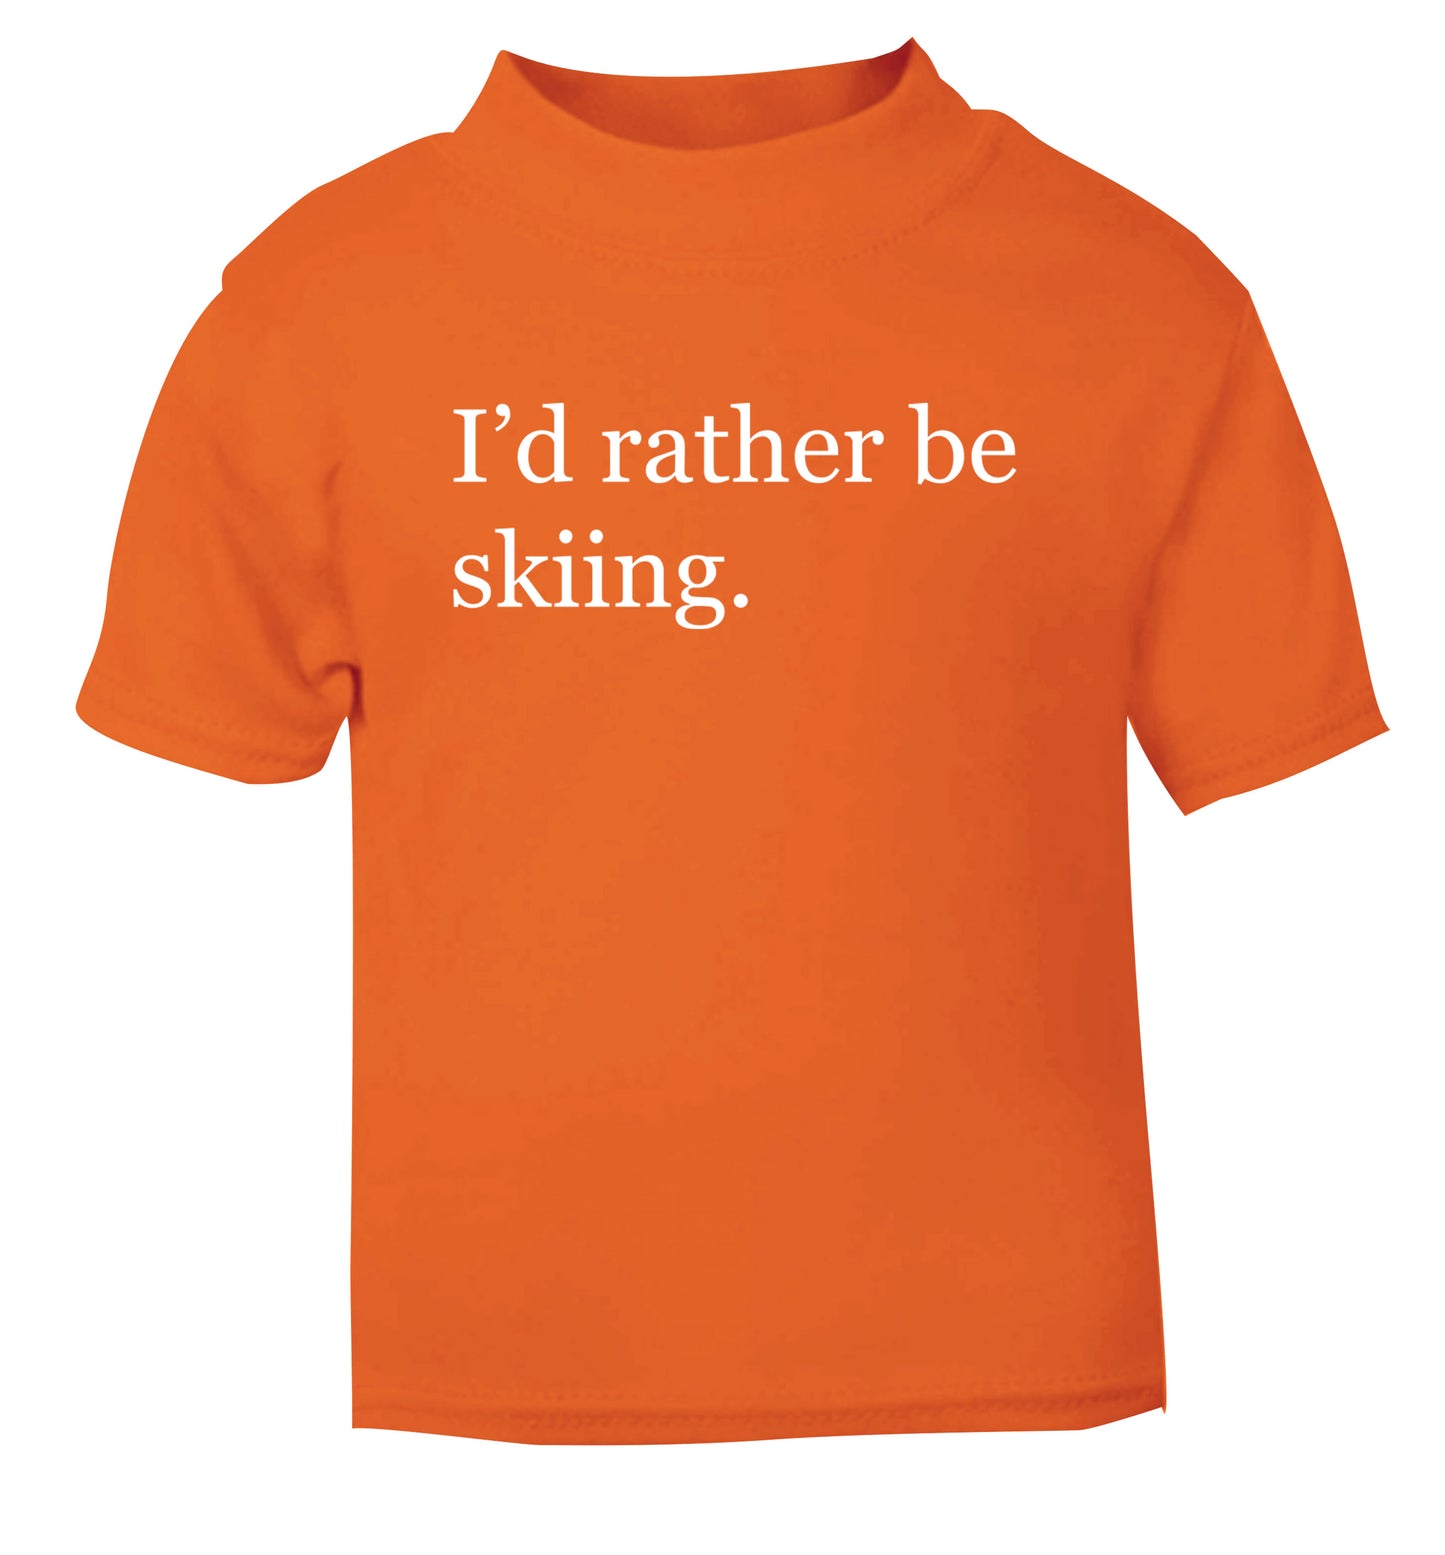 I'd rather be skiing orange Baby Toddler Tshirt 2 Years